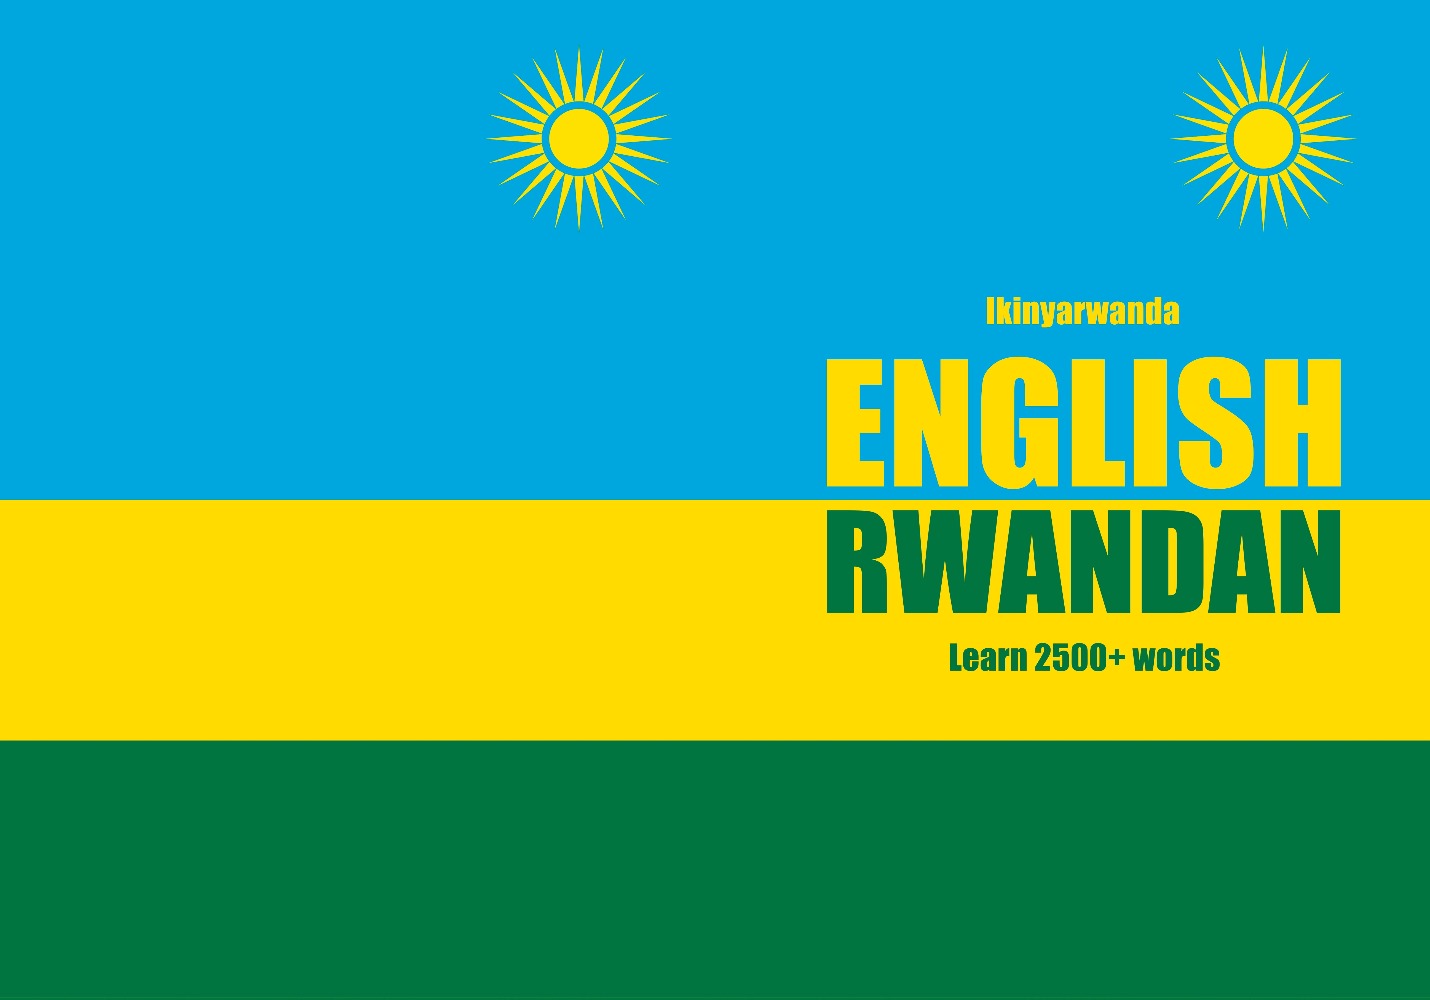 Rwandan language learning notebook cover